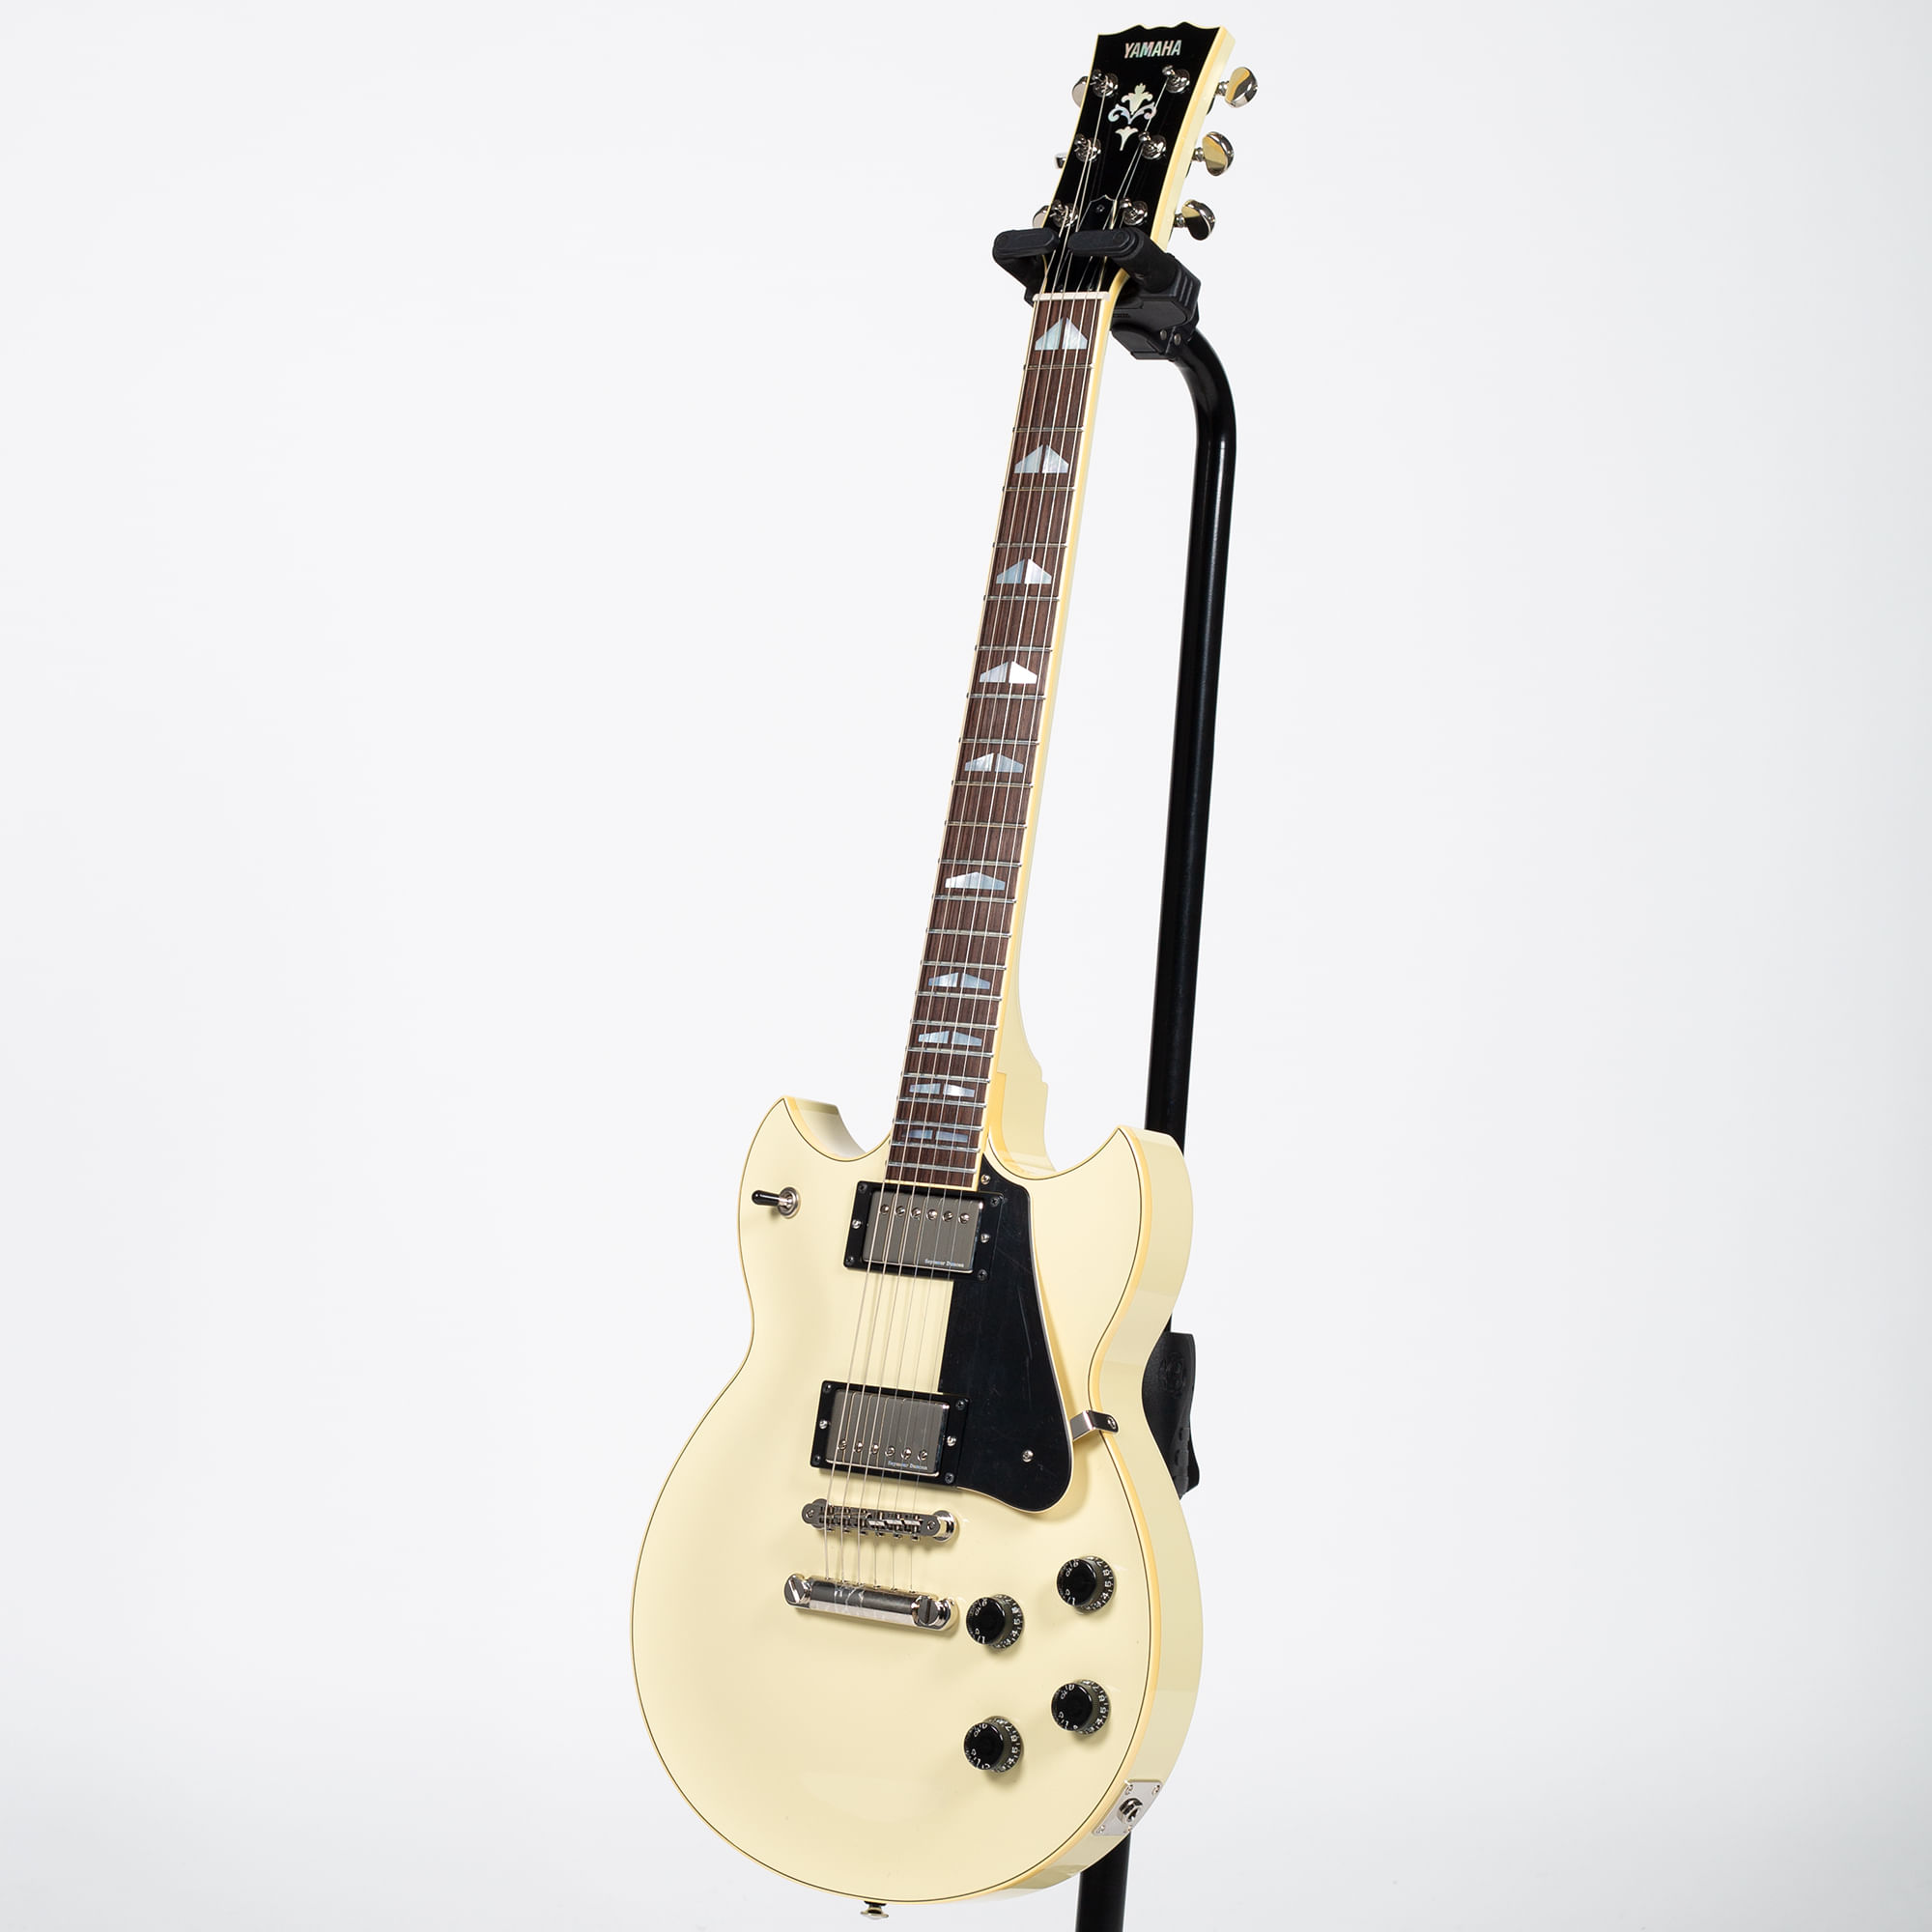 Yamaha SG1820 Standard Electric Guitar - Vintage White